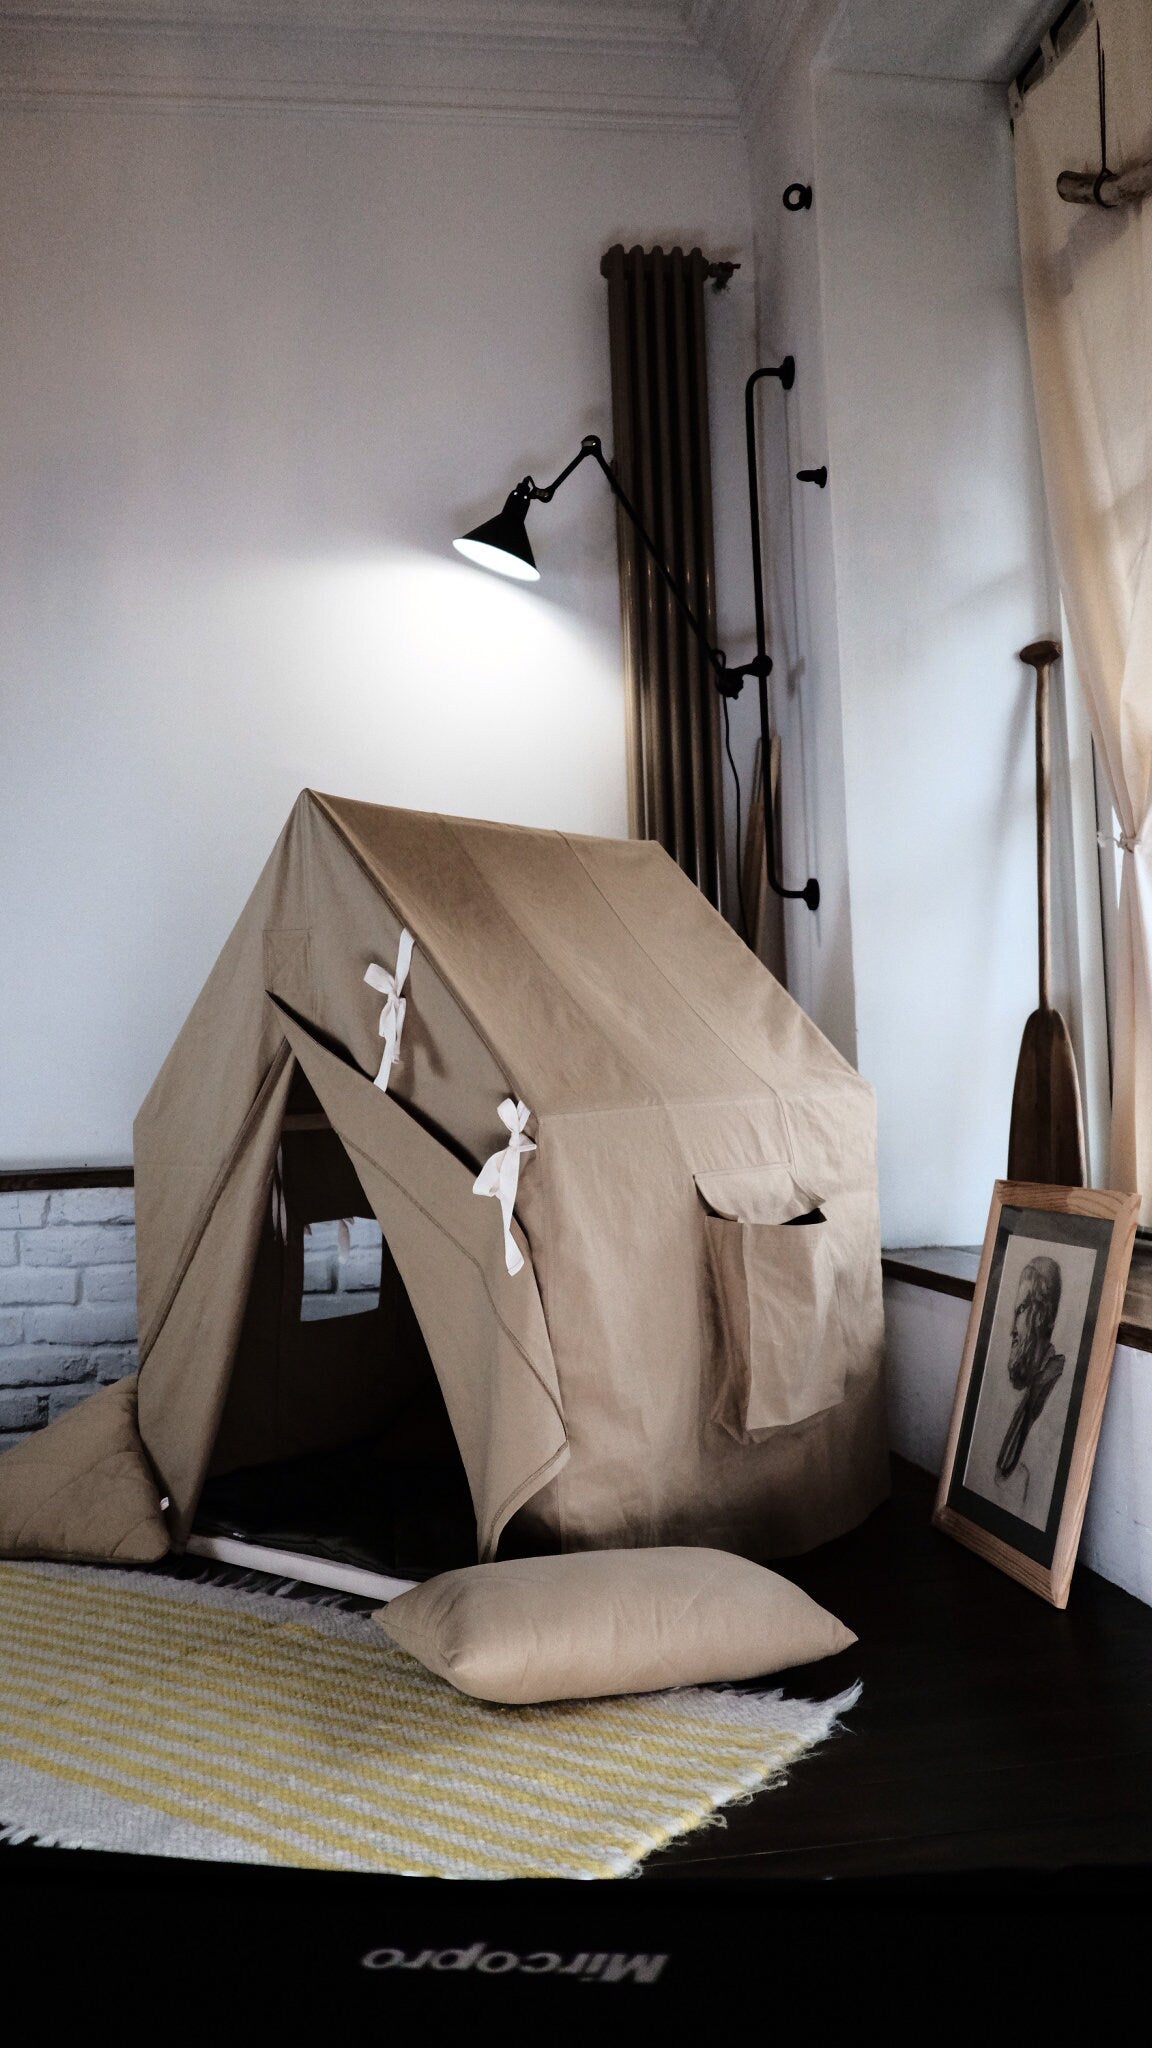 Safari tent / Camp teepee / Beige playhouse/Sleep square tent / Indoor play house / Kids camping tent set - 1st birthday